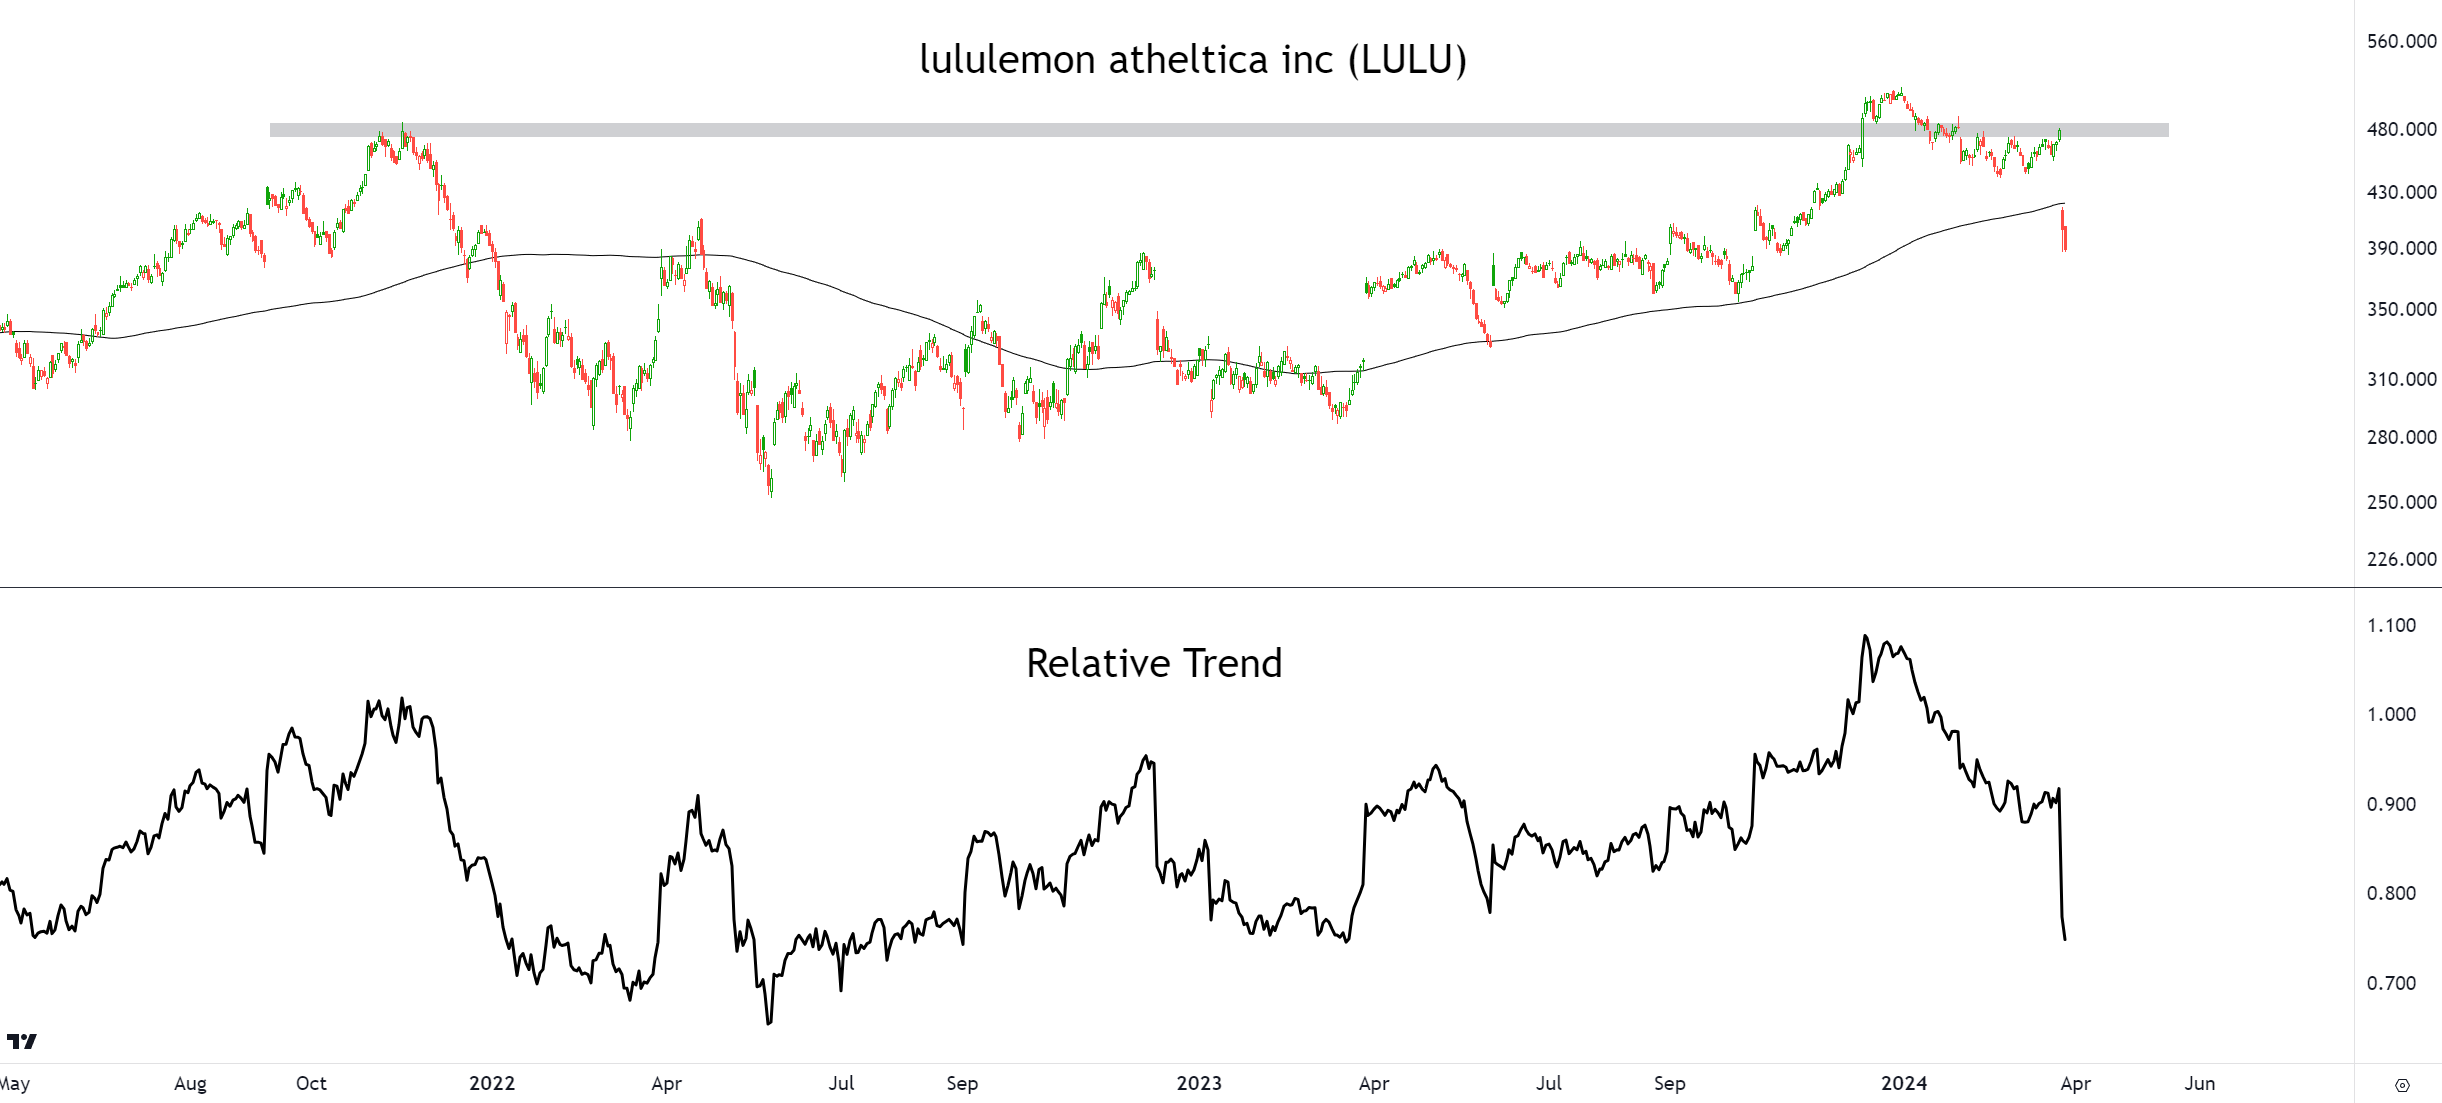 Lululemon Athletica Inc (NASDAQ:LULU) Share Price